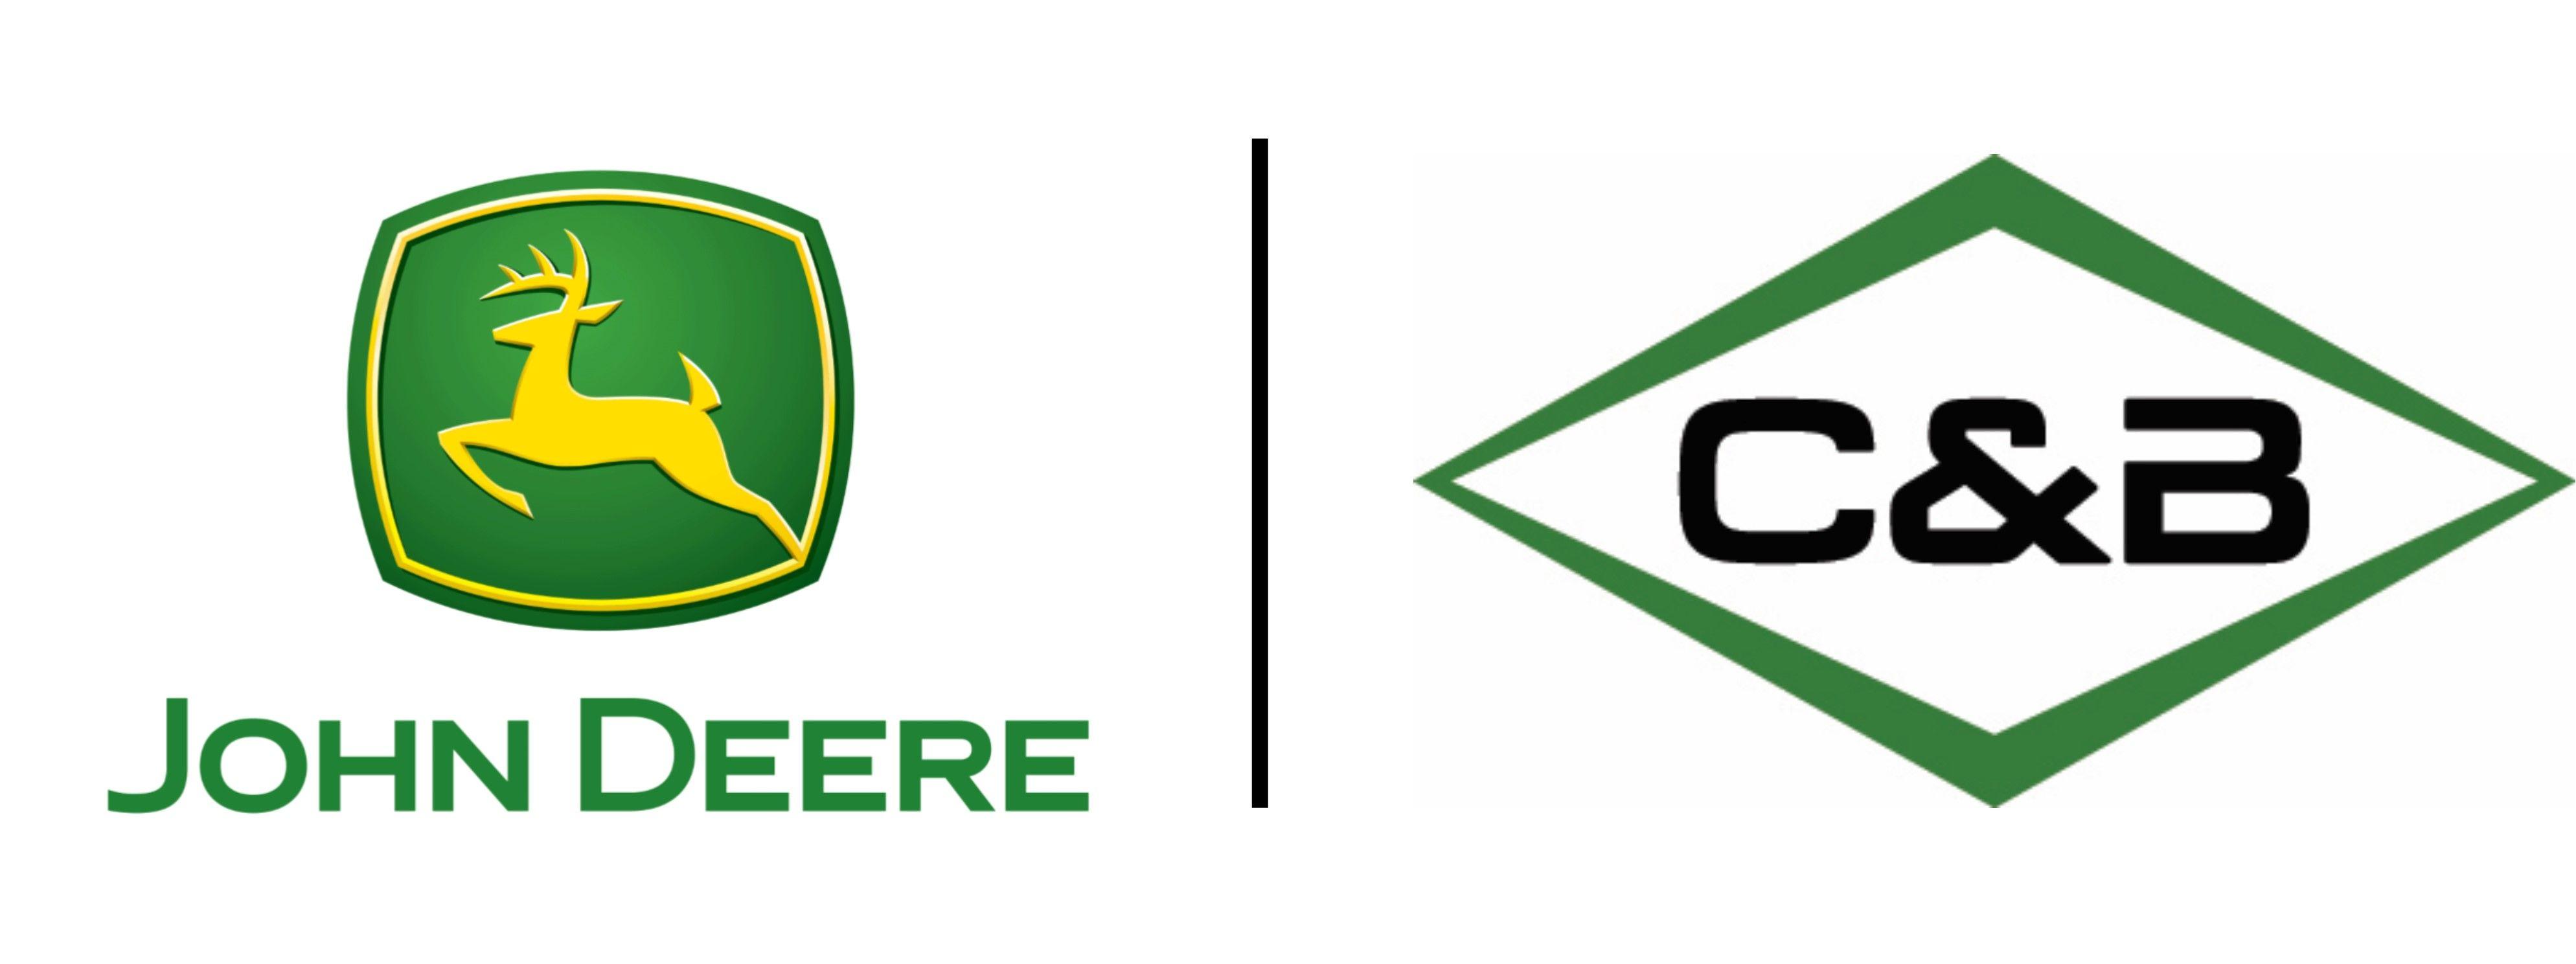 Early John Deere Logo - NOTEBOOM MERGER